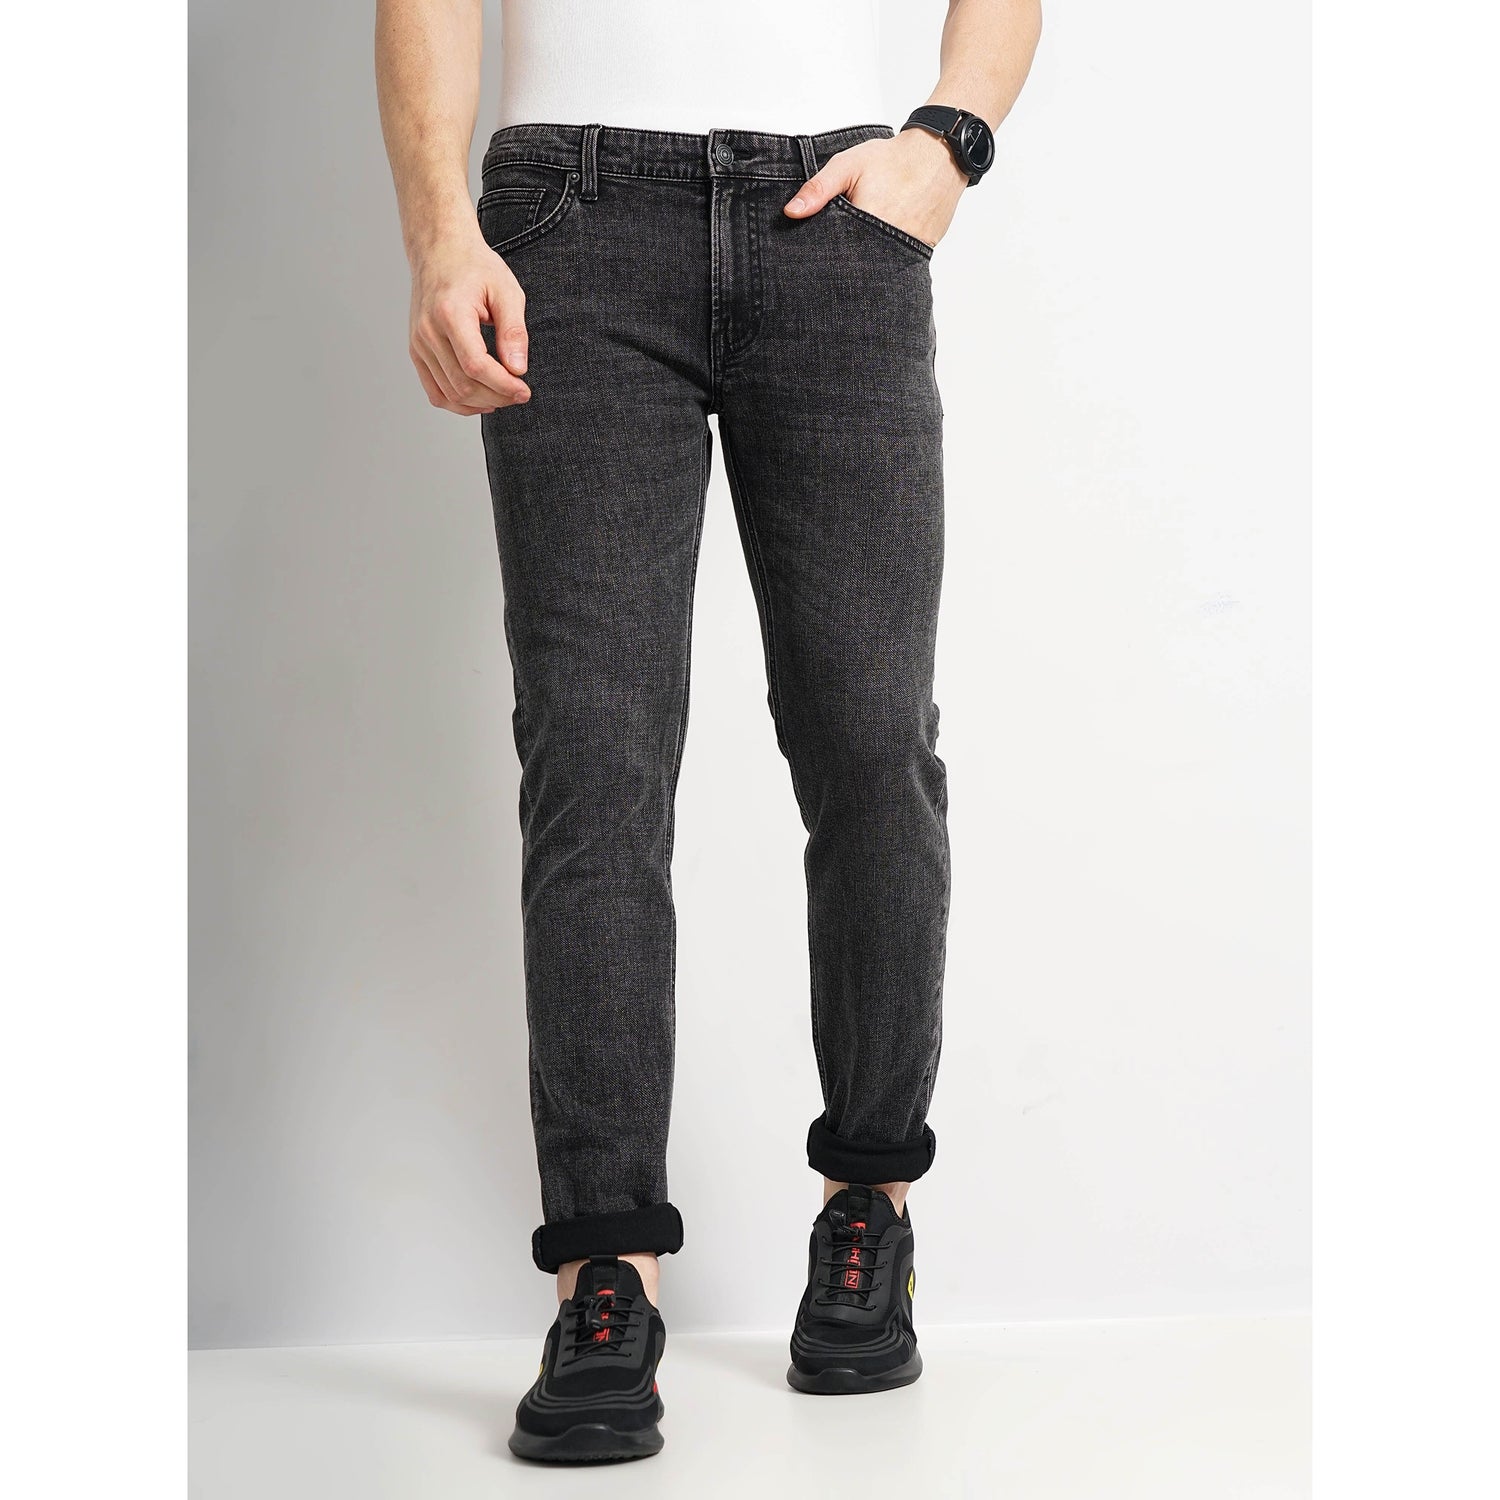 Men Black Slim Fit Cotton Twill Denim Jeans (GOBLACKIN25)